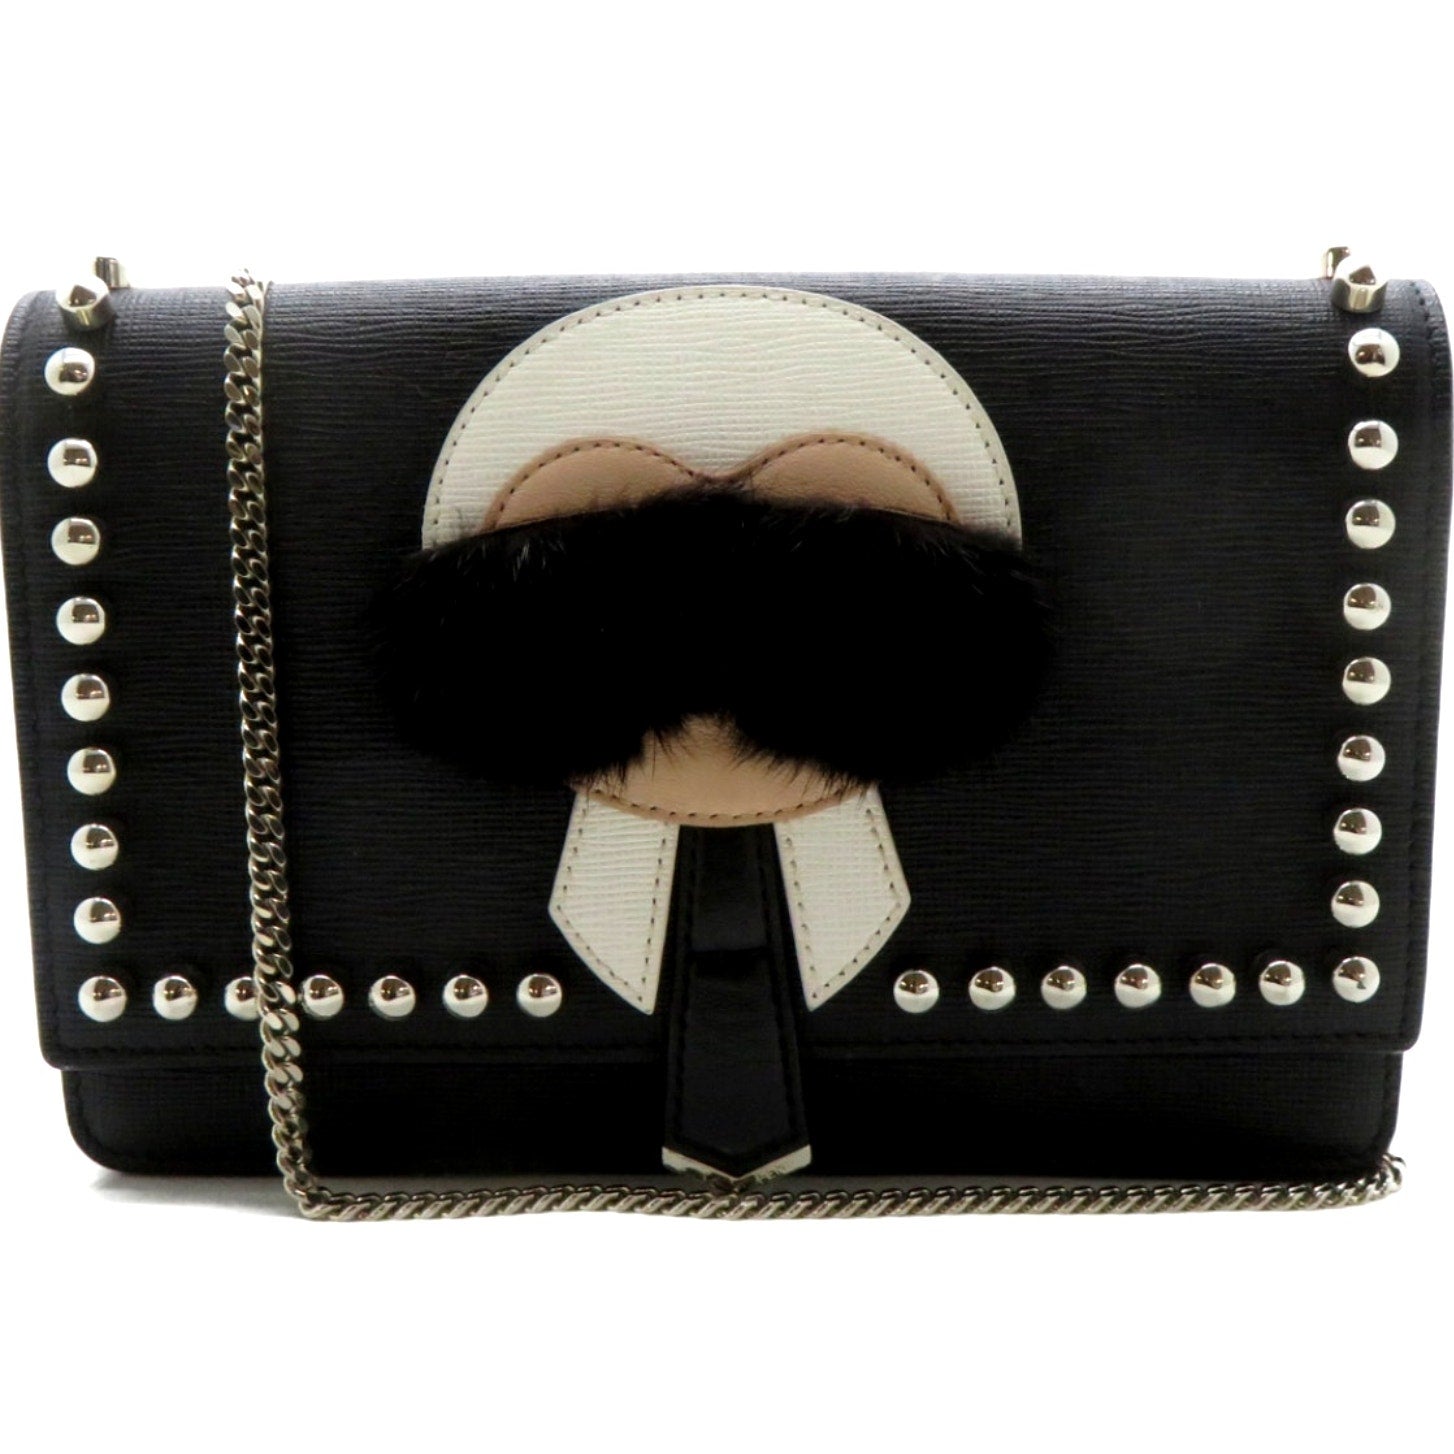 Authentic FENDI Shoulder Bag Leather Black